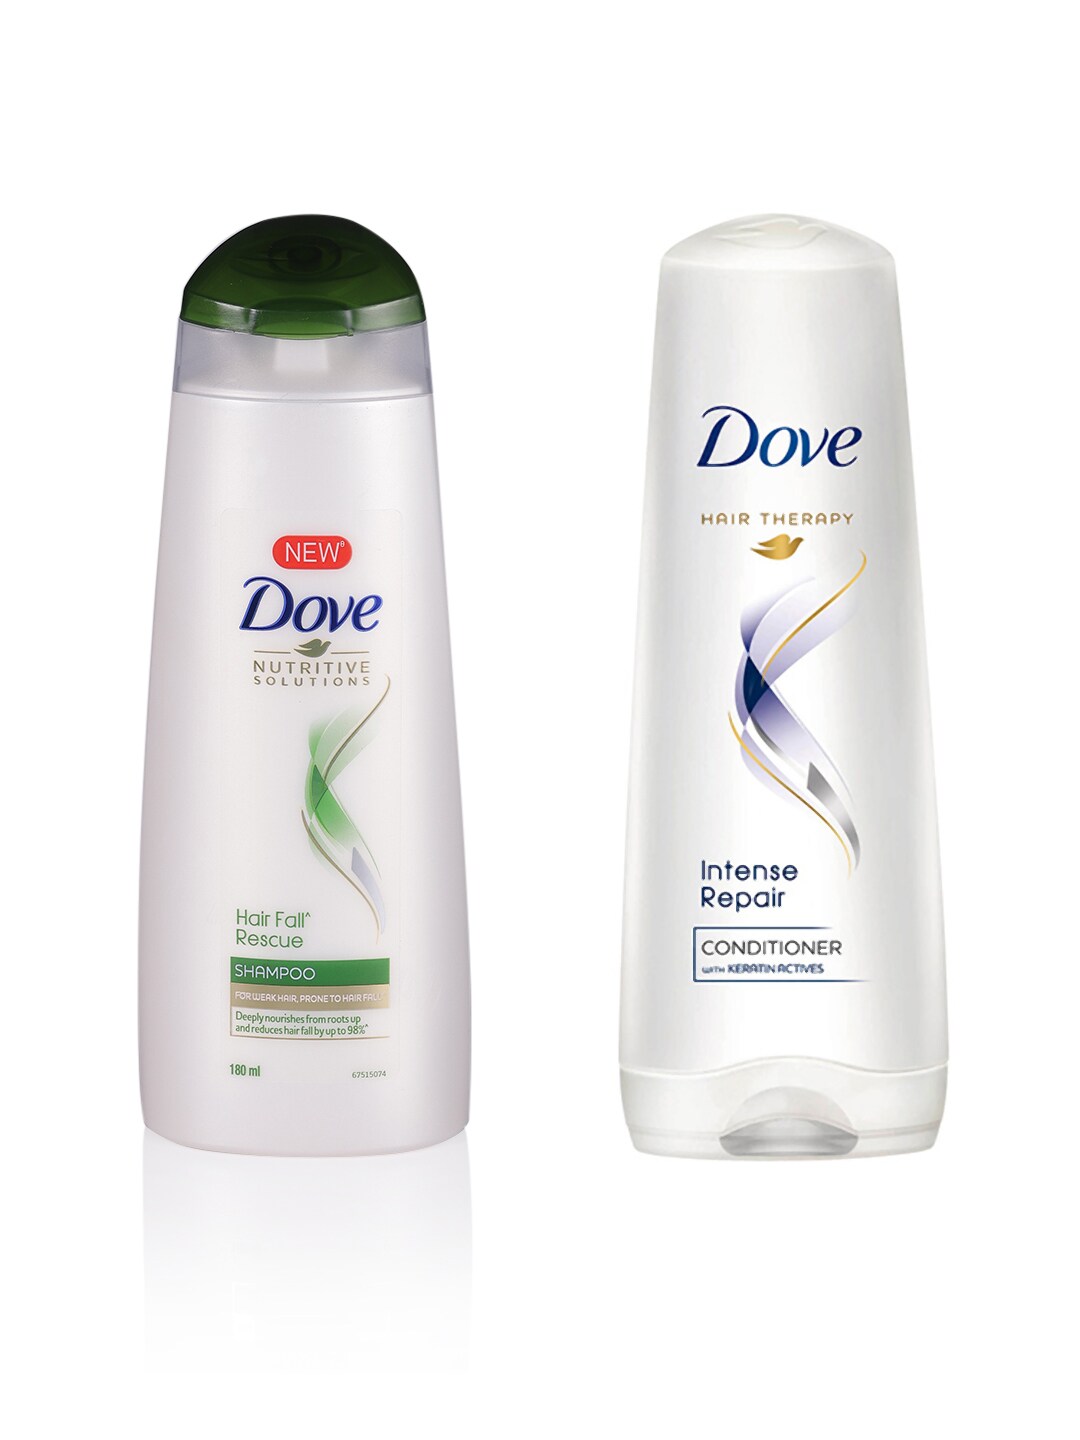 Dove Set Of Hair Fall Rescue Shampoo & Dove Intense Repair Conditioner Price in India